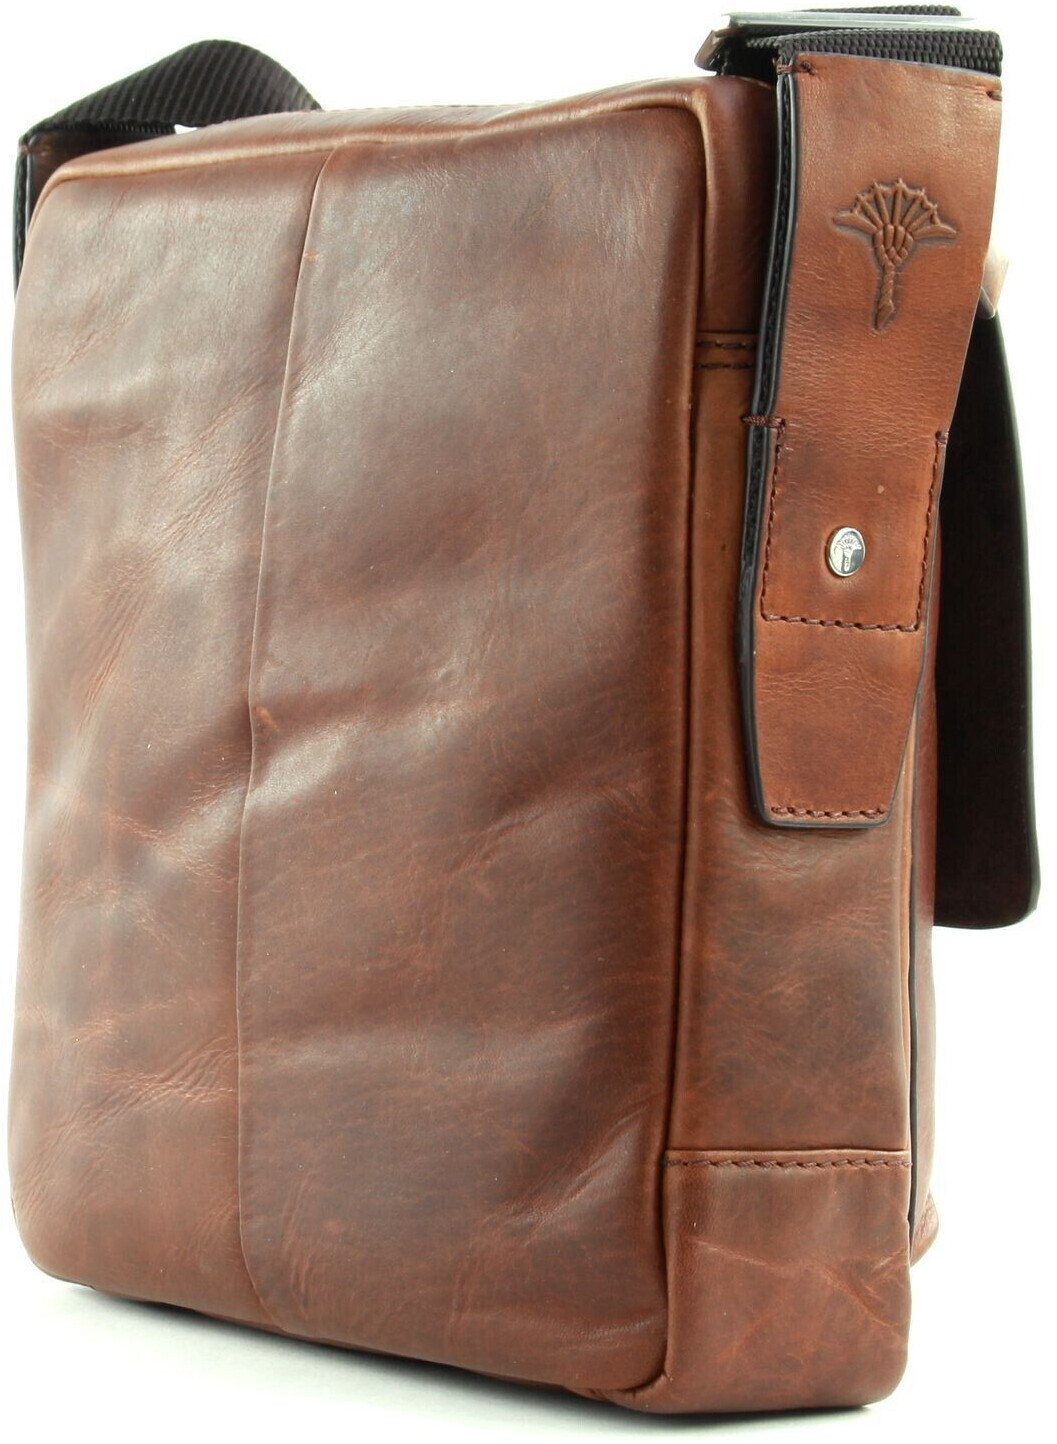 Joop! Loreto Remus Shoulder Bag dark brown ab 121,58 € | Preisvergleich bei